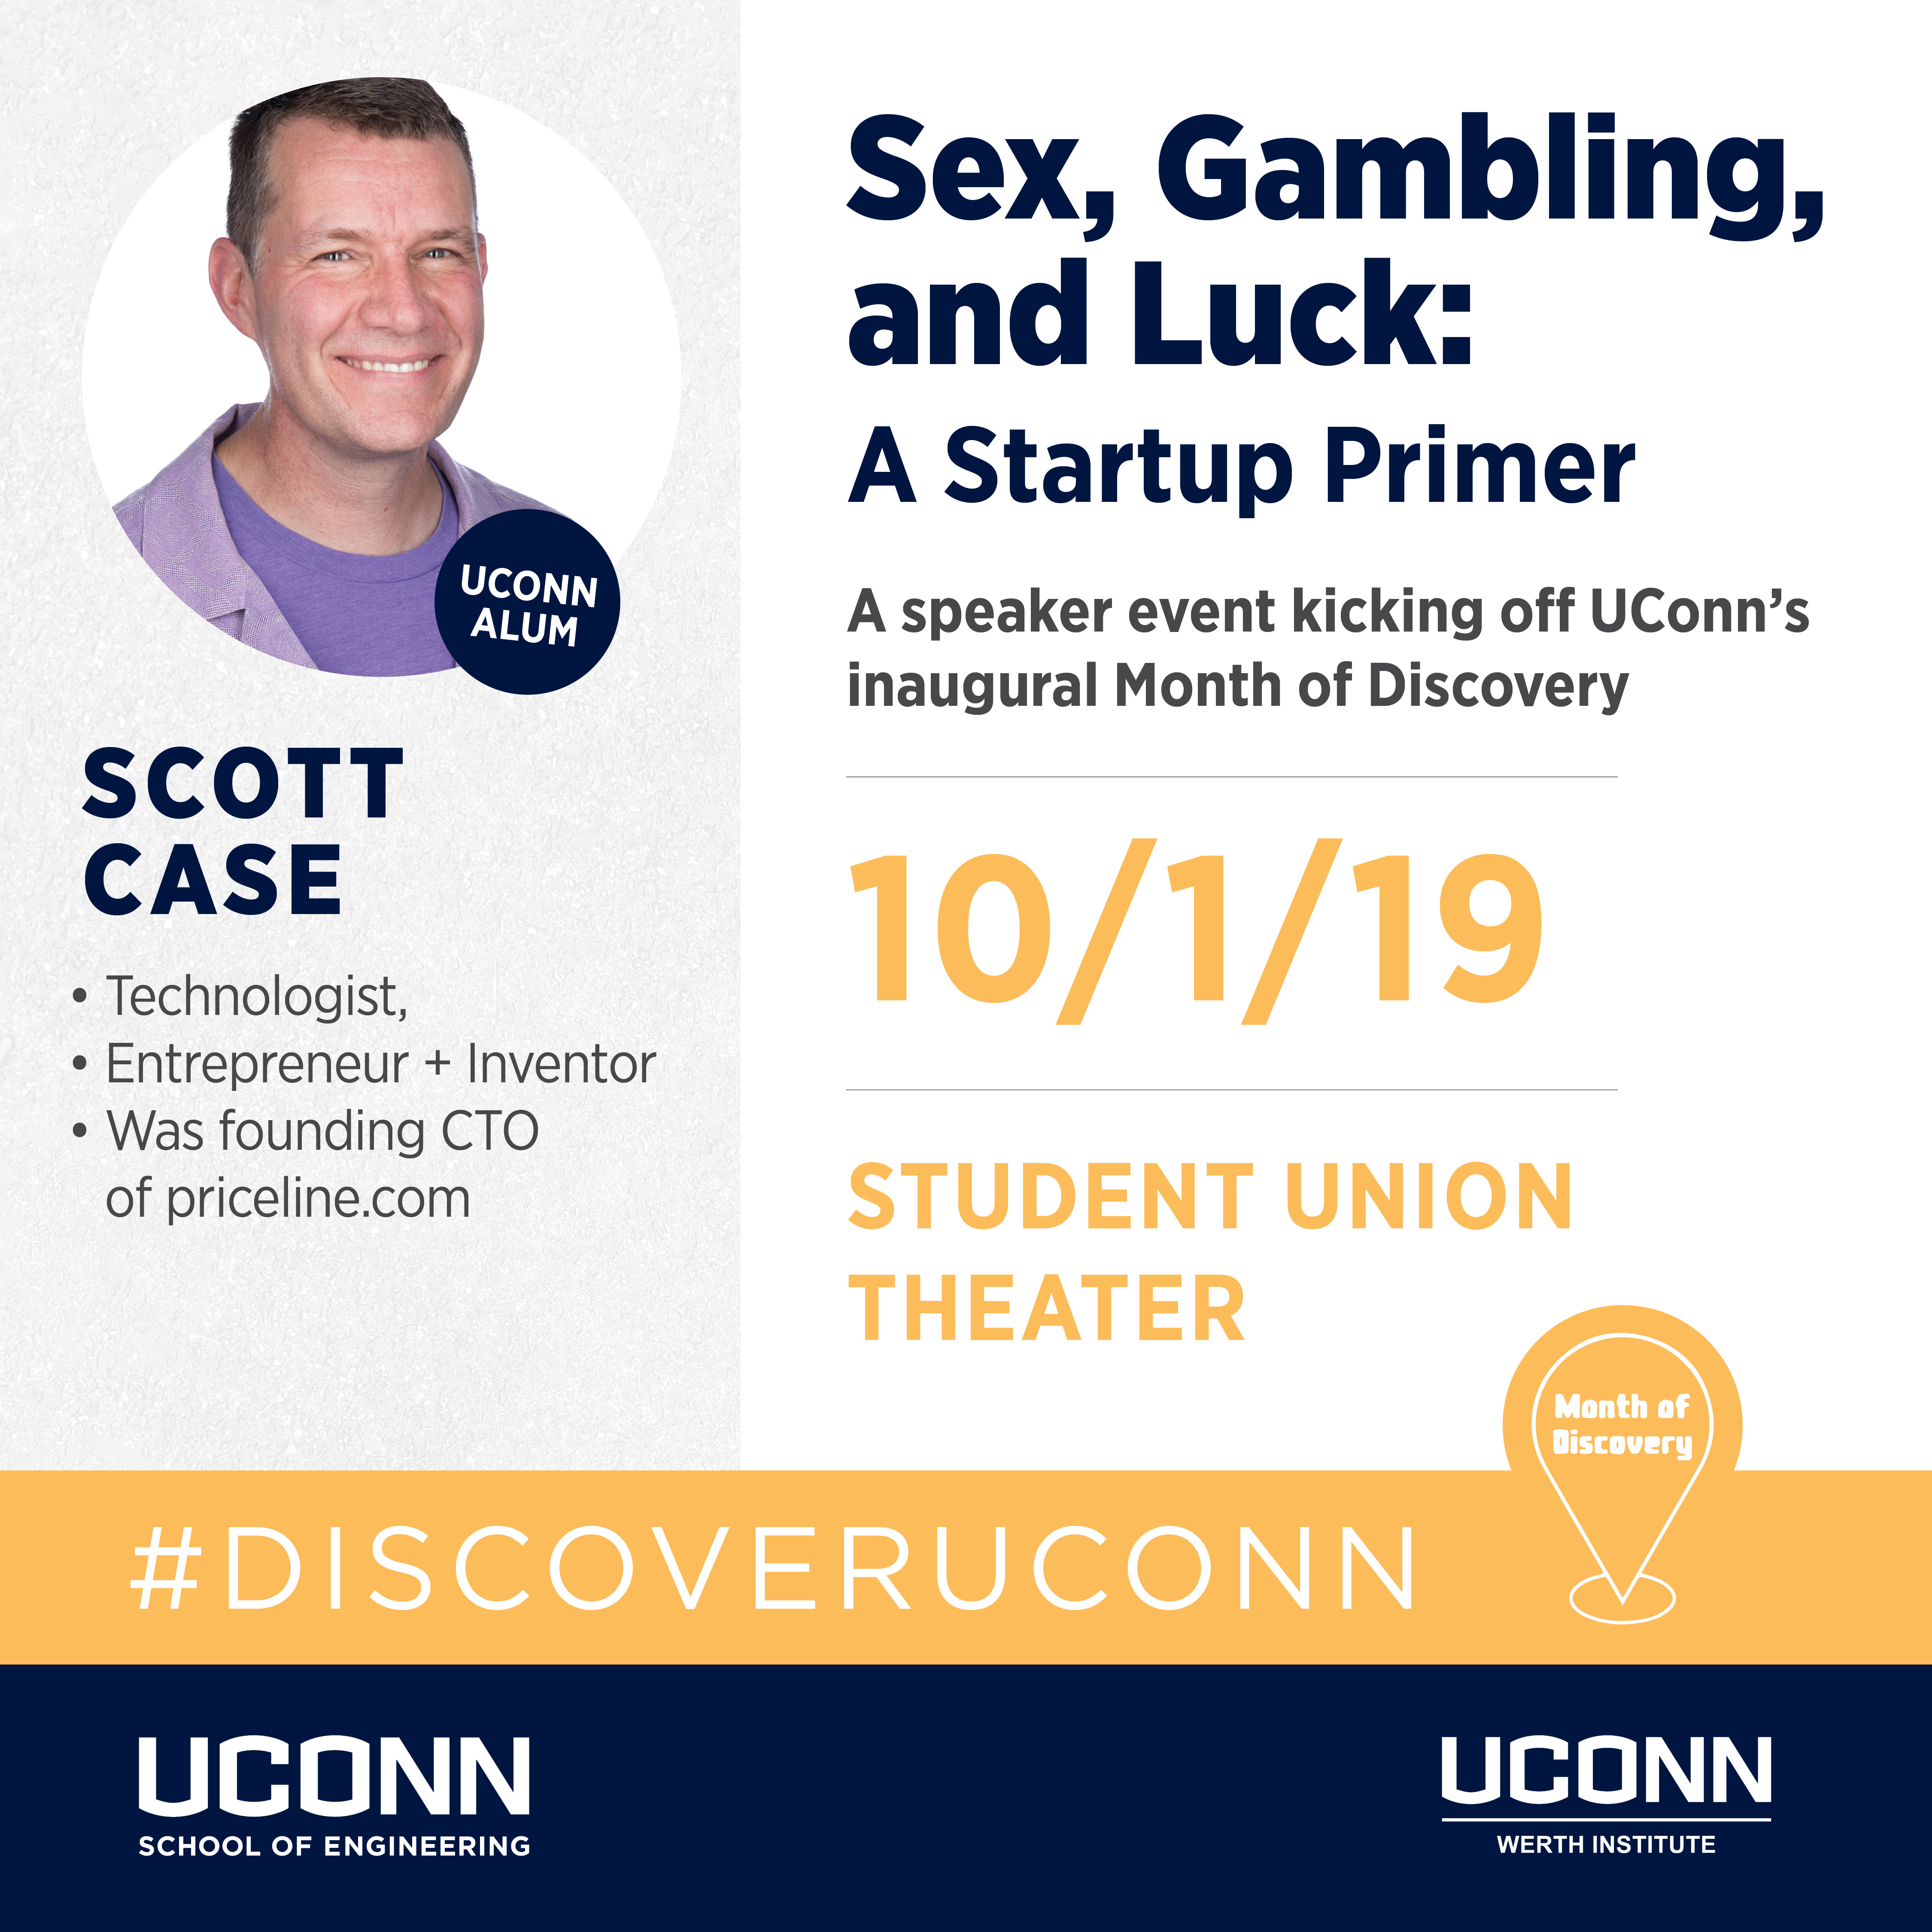 Sex, Gambling, and Luck: A Startup Primer. Scott Case speaker event on 10/1/19.